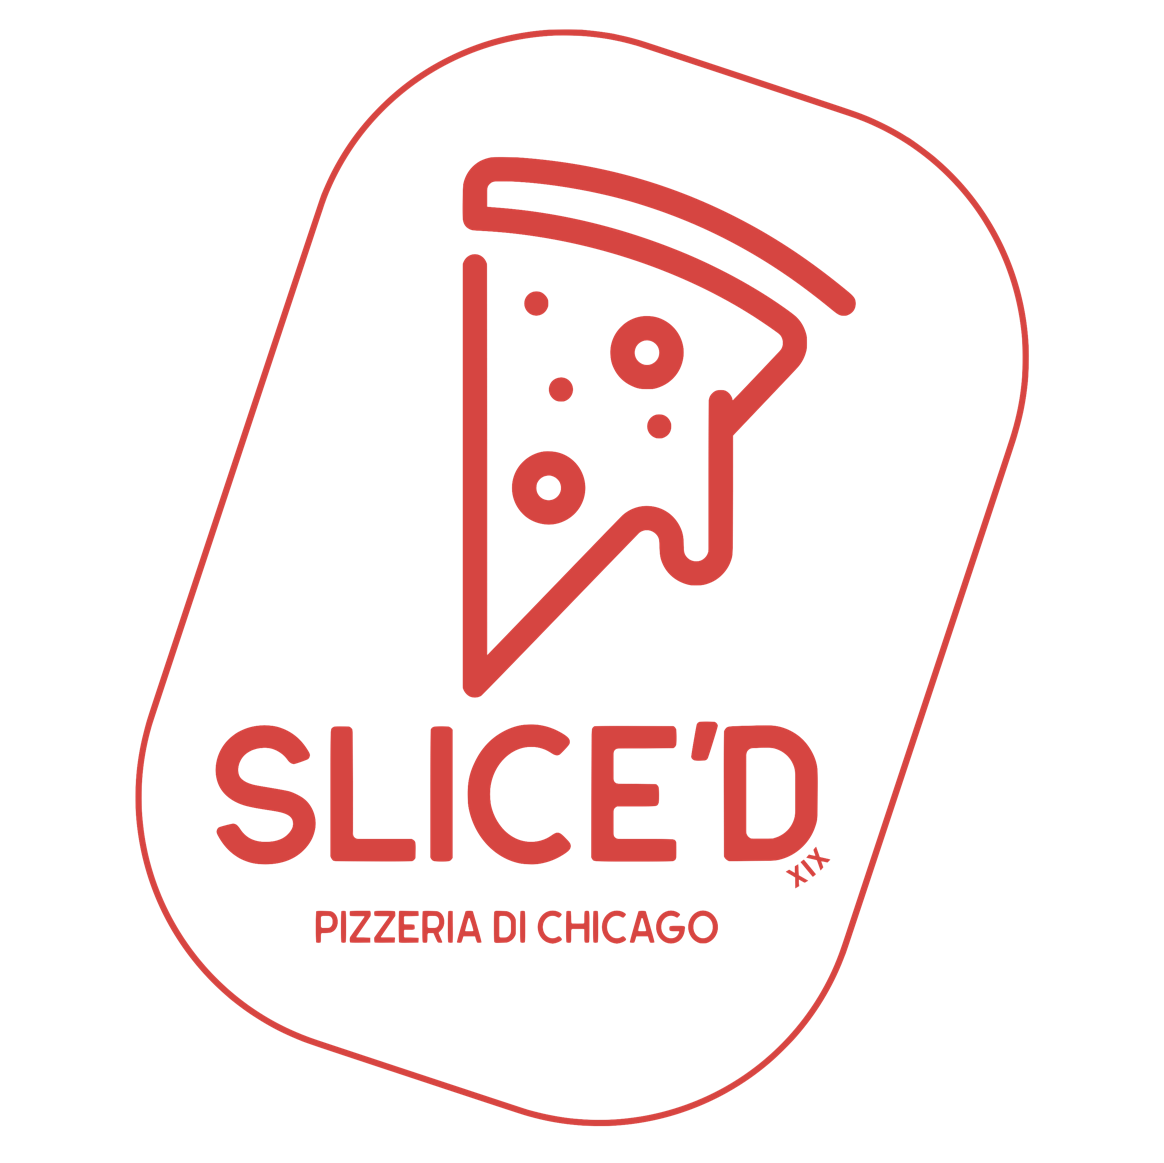 Red slice'd pizzeria logo